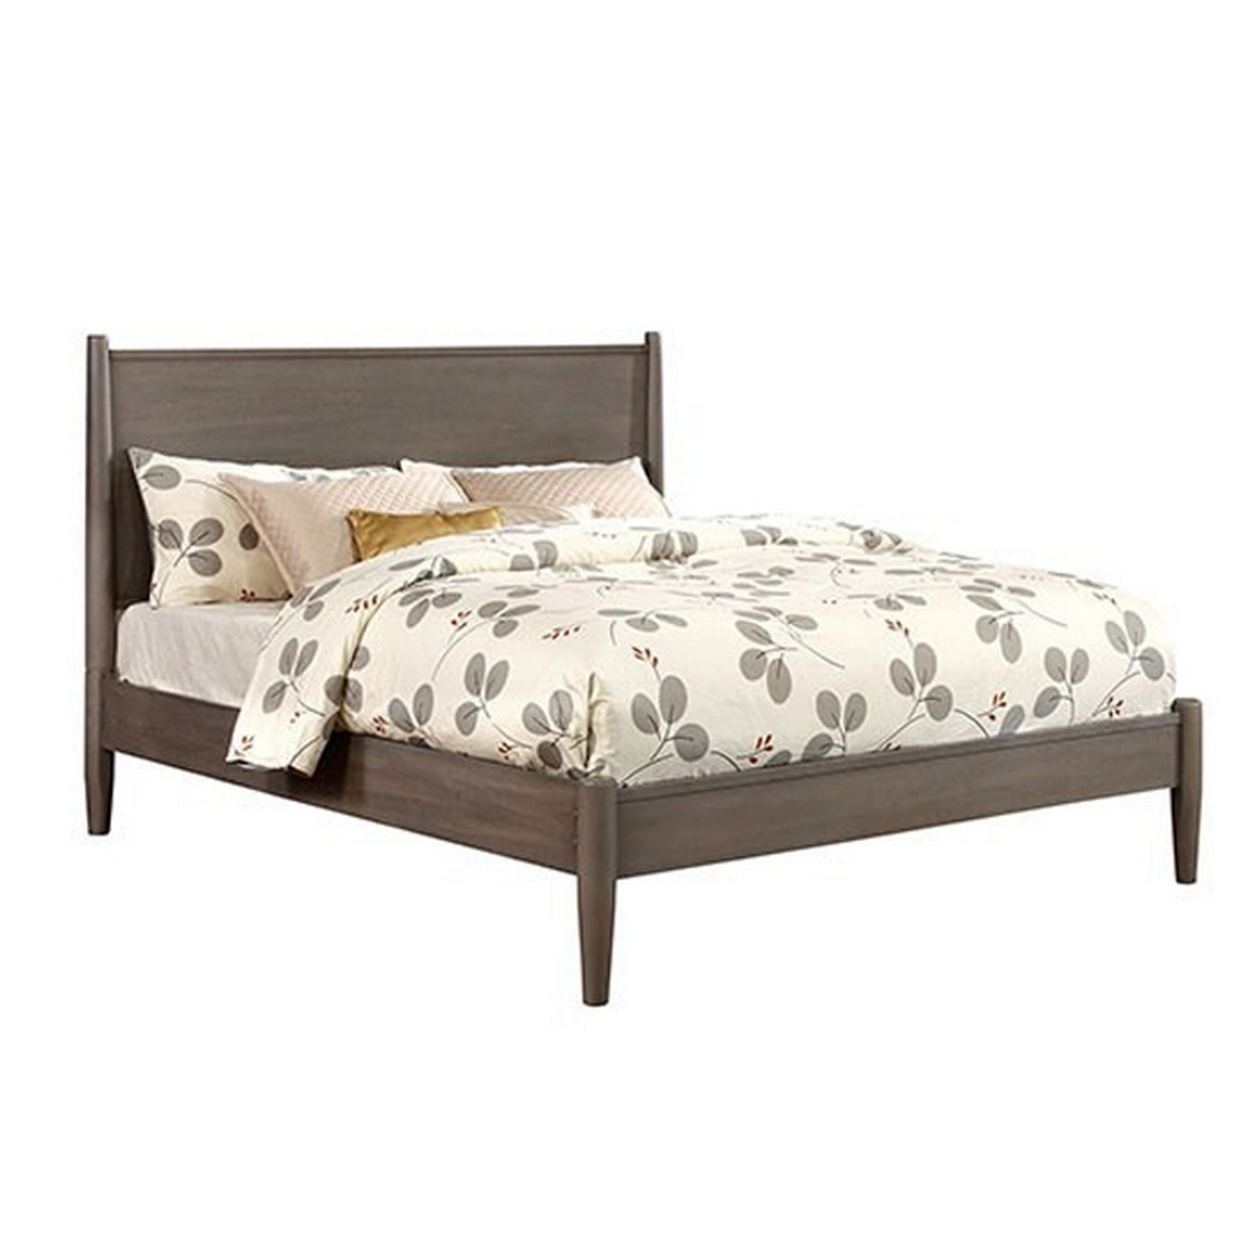 Wooden Eastern King Size Bed With Panel Headboard, Gray- Saltoro Sherpi